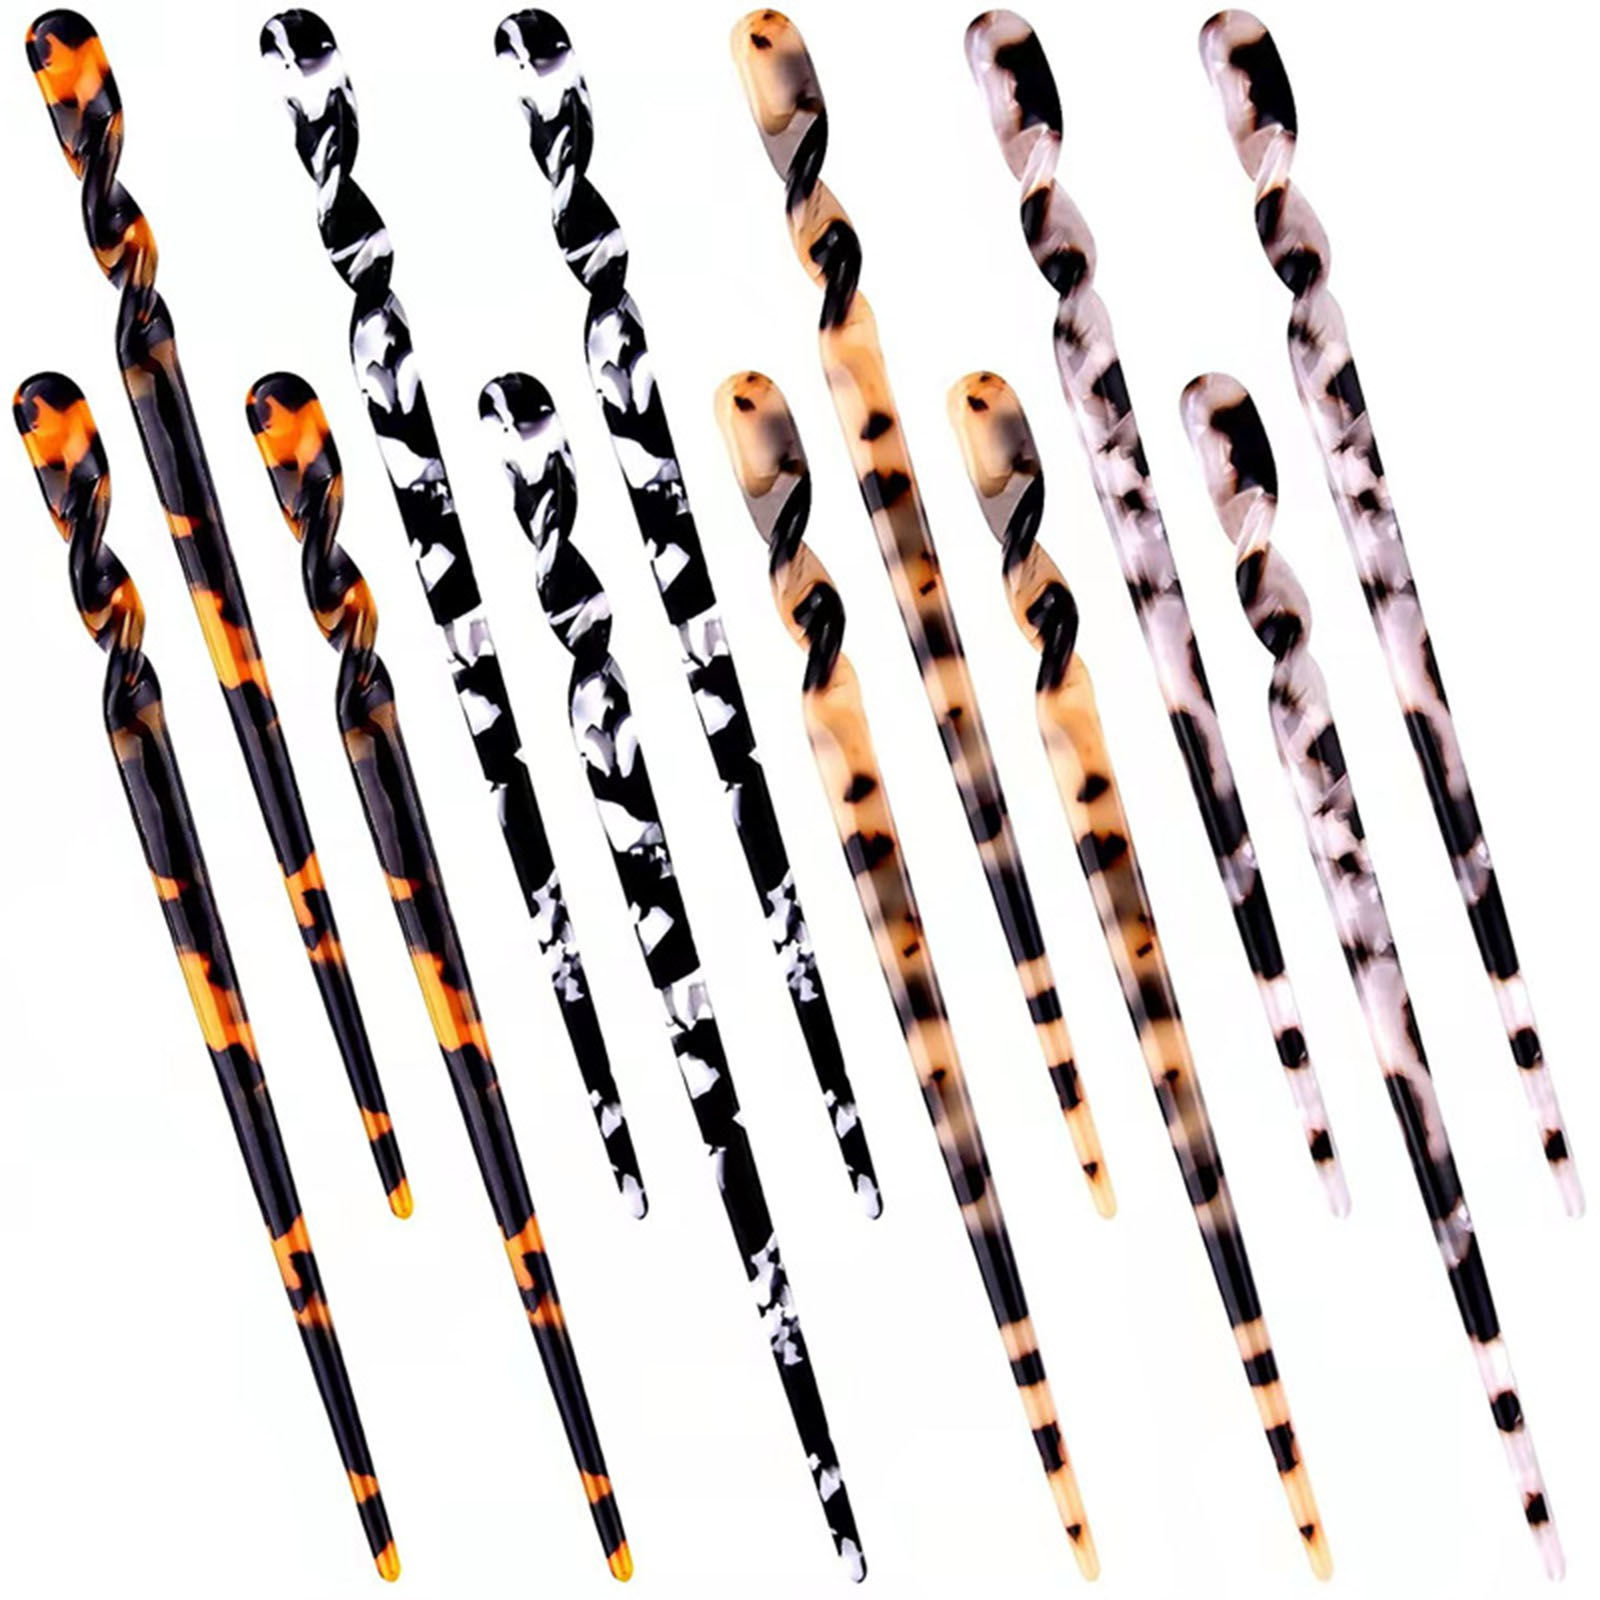 Image de Acrylic Hairpins Multicolor Geometric Twisted 17.5mm, 1 Piece